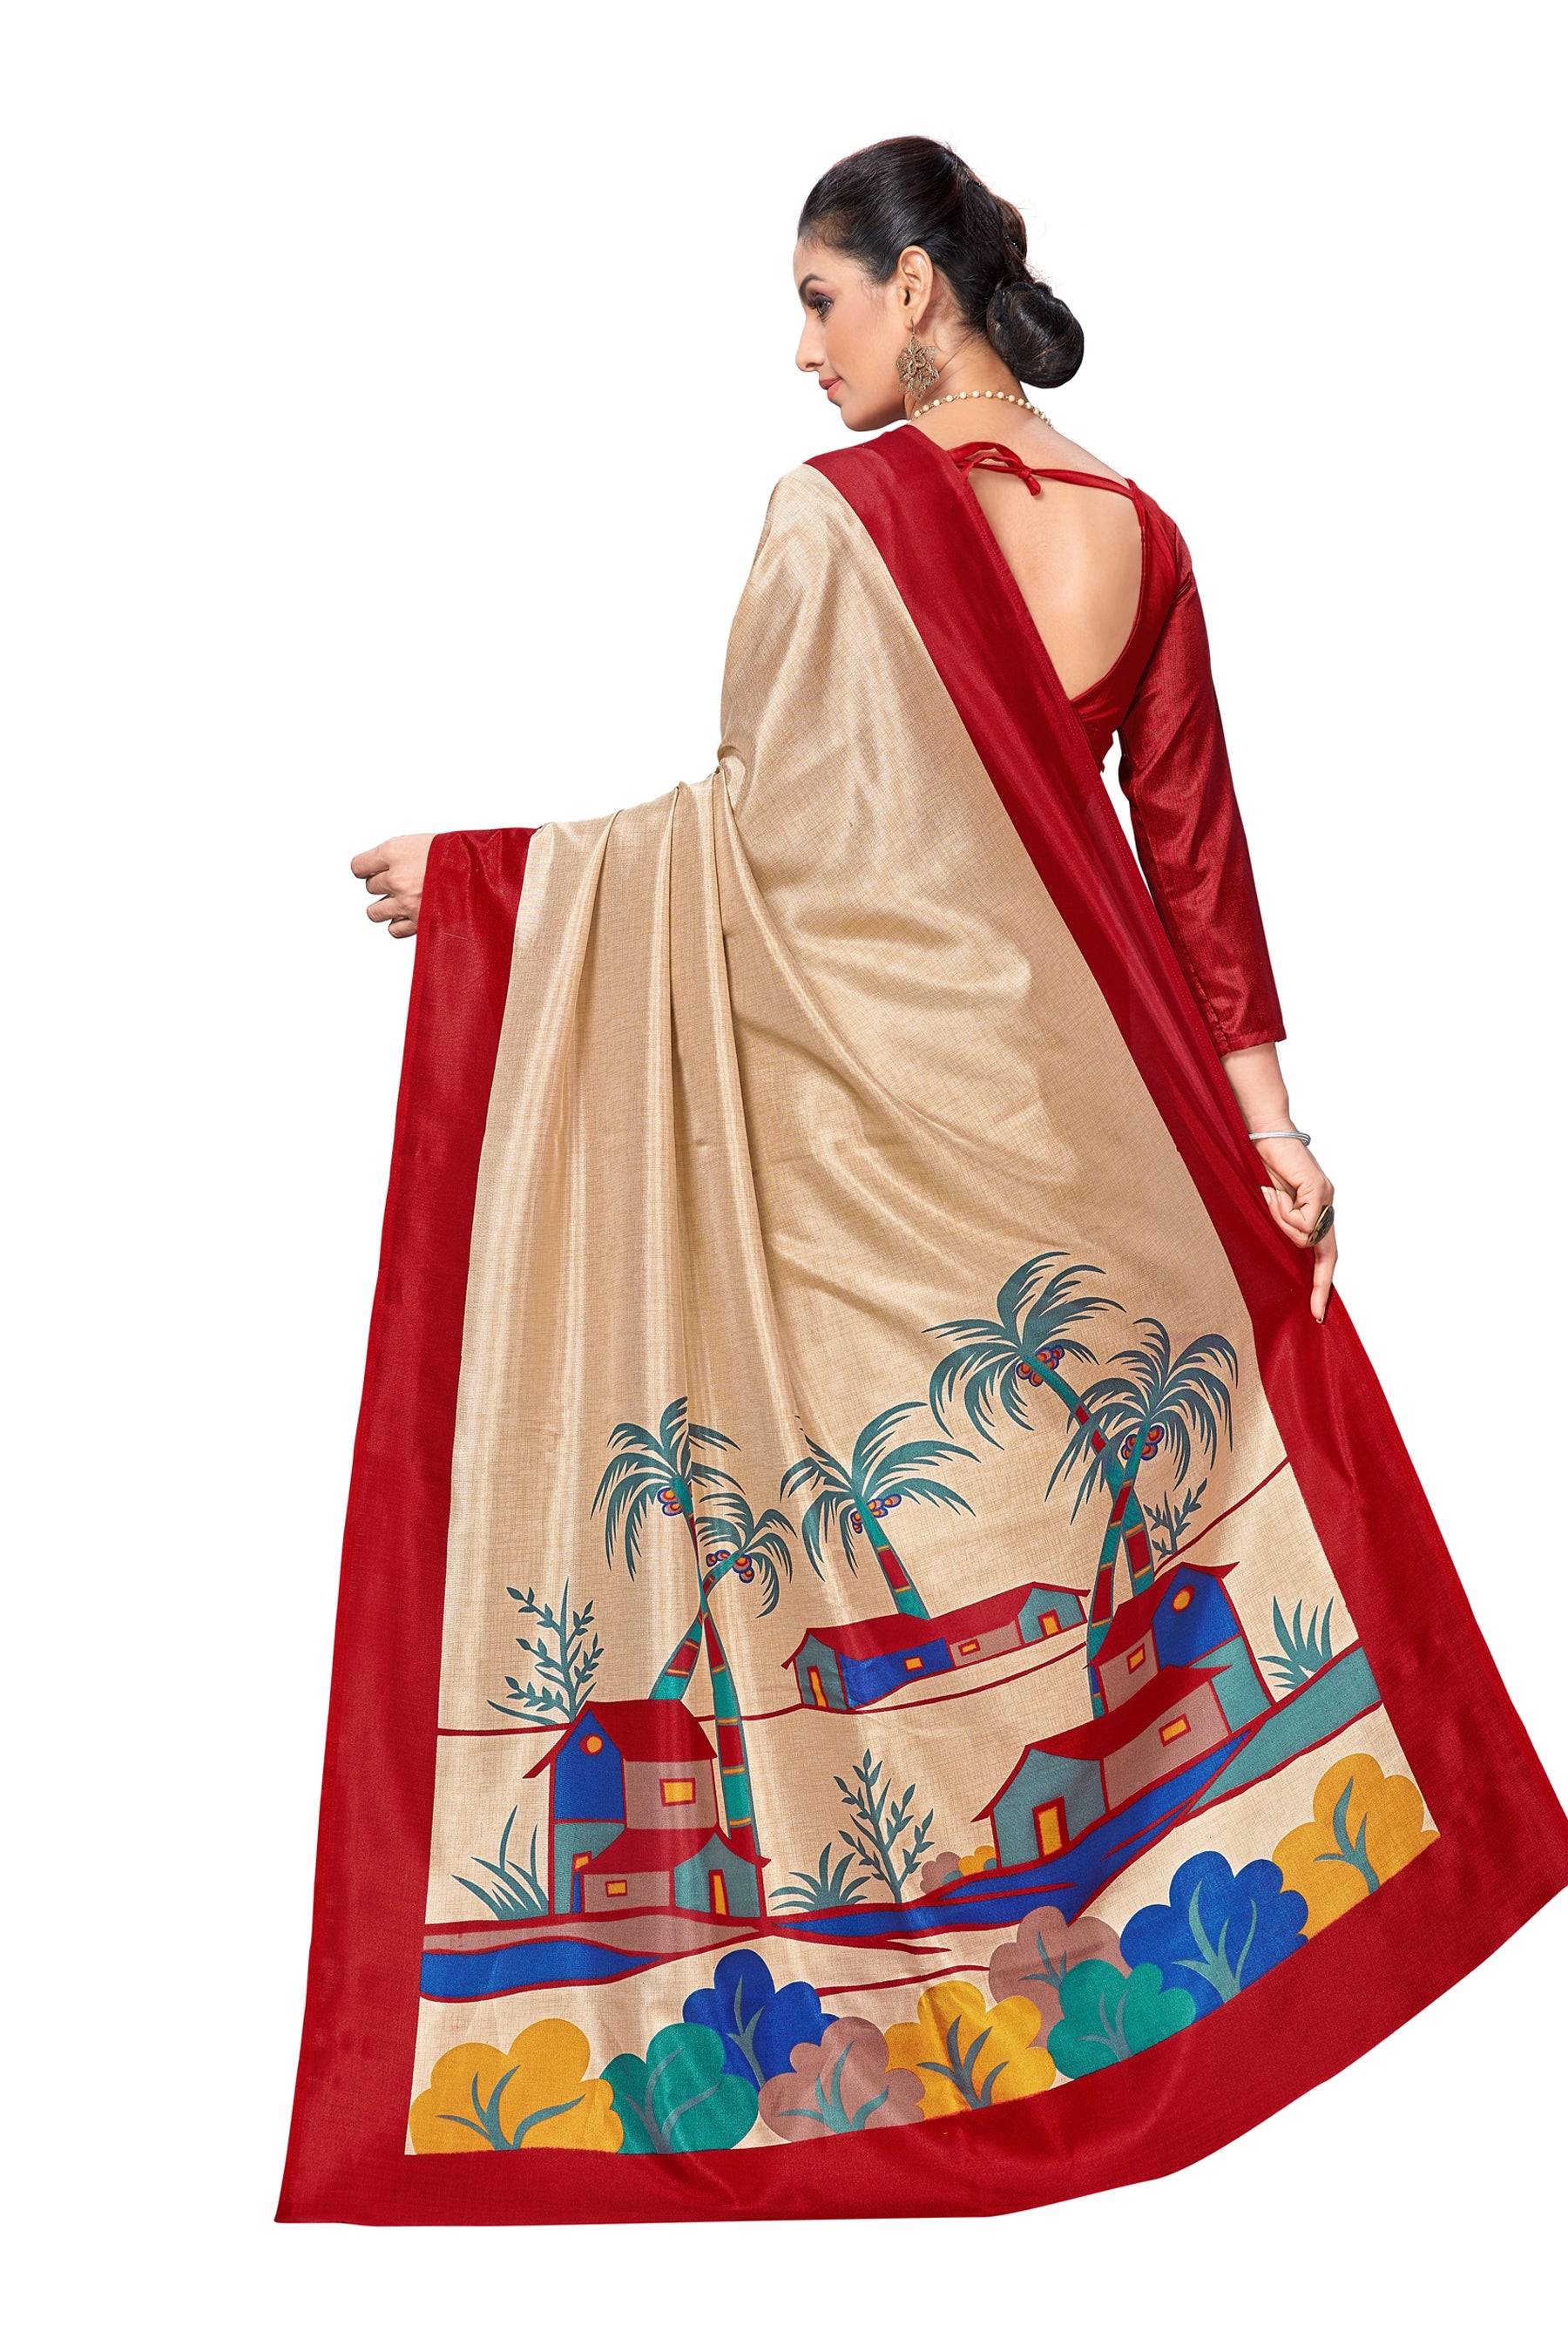 Vimla Women's Red Malgudi Art Silk Uniform Saree with Blouse (2105_Red)